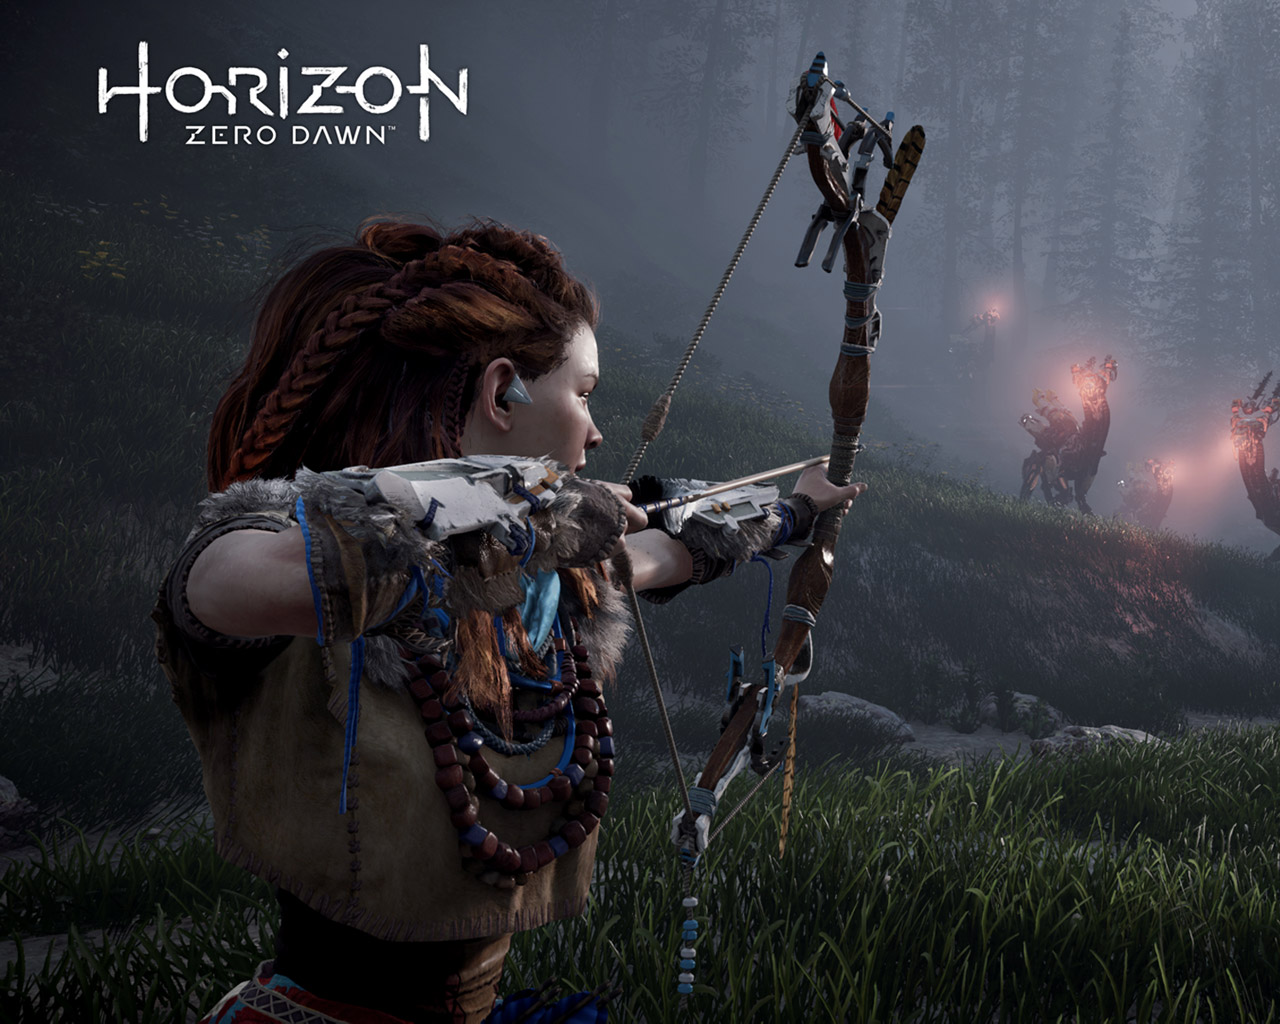 horizon zero dawn wallpaper,action adventure game,bow and arrow,compound bow,cg artwork,pc game